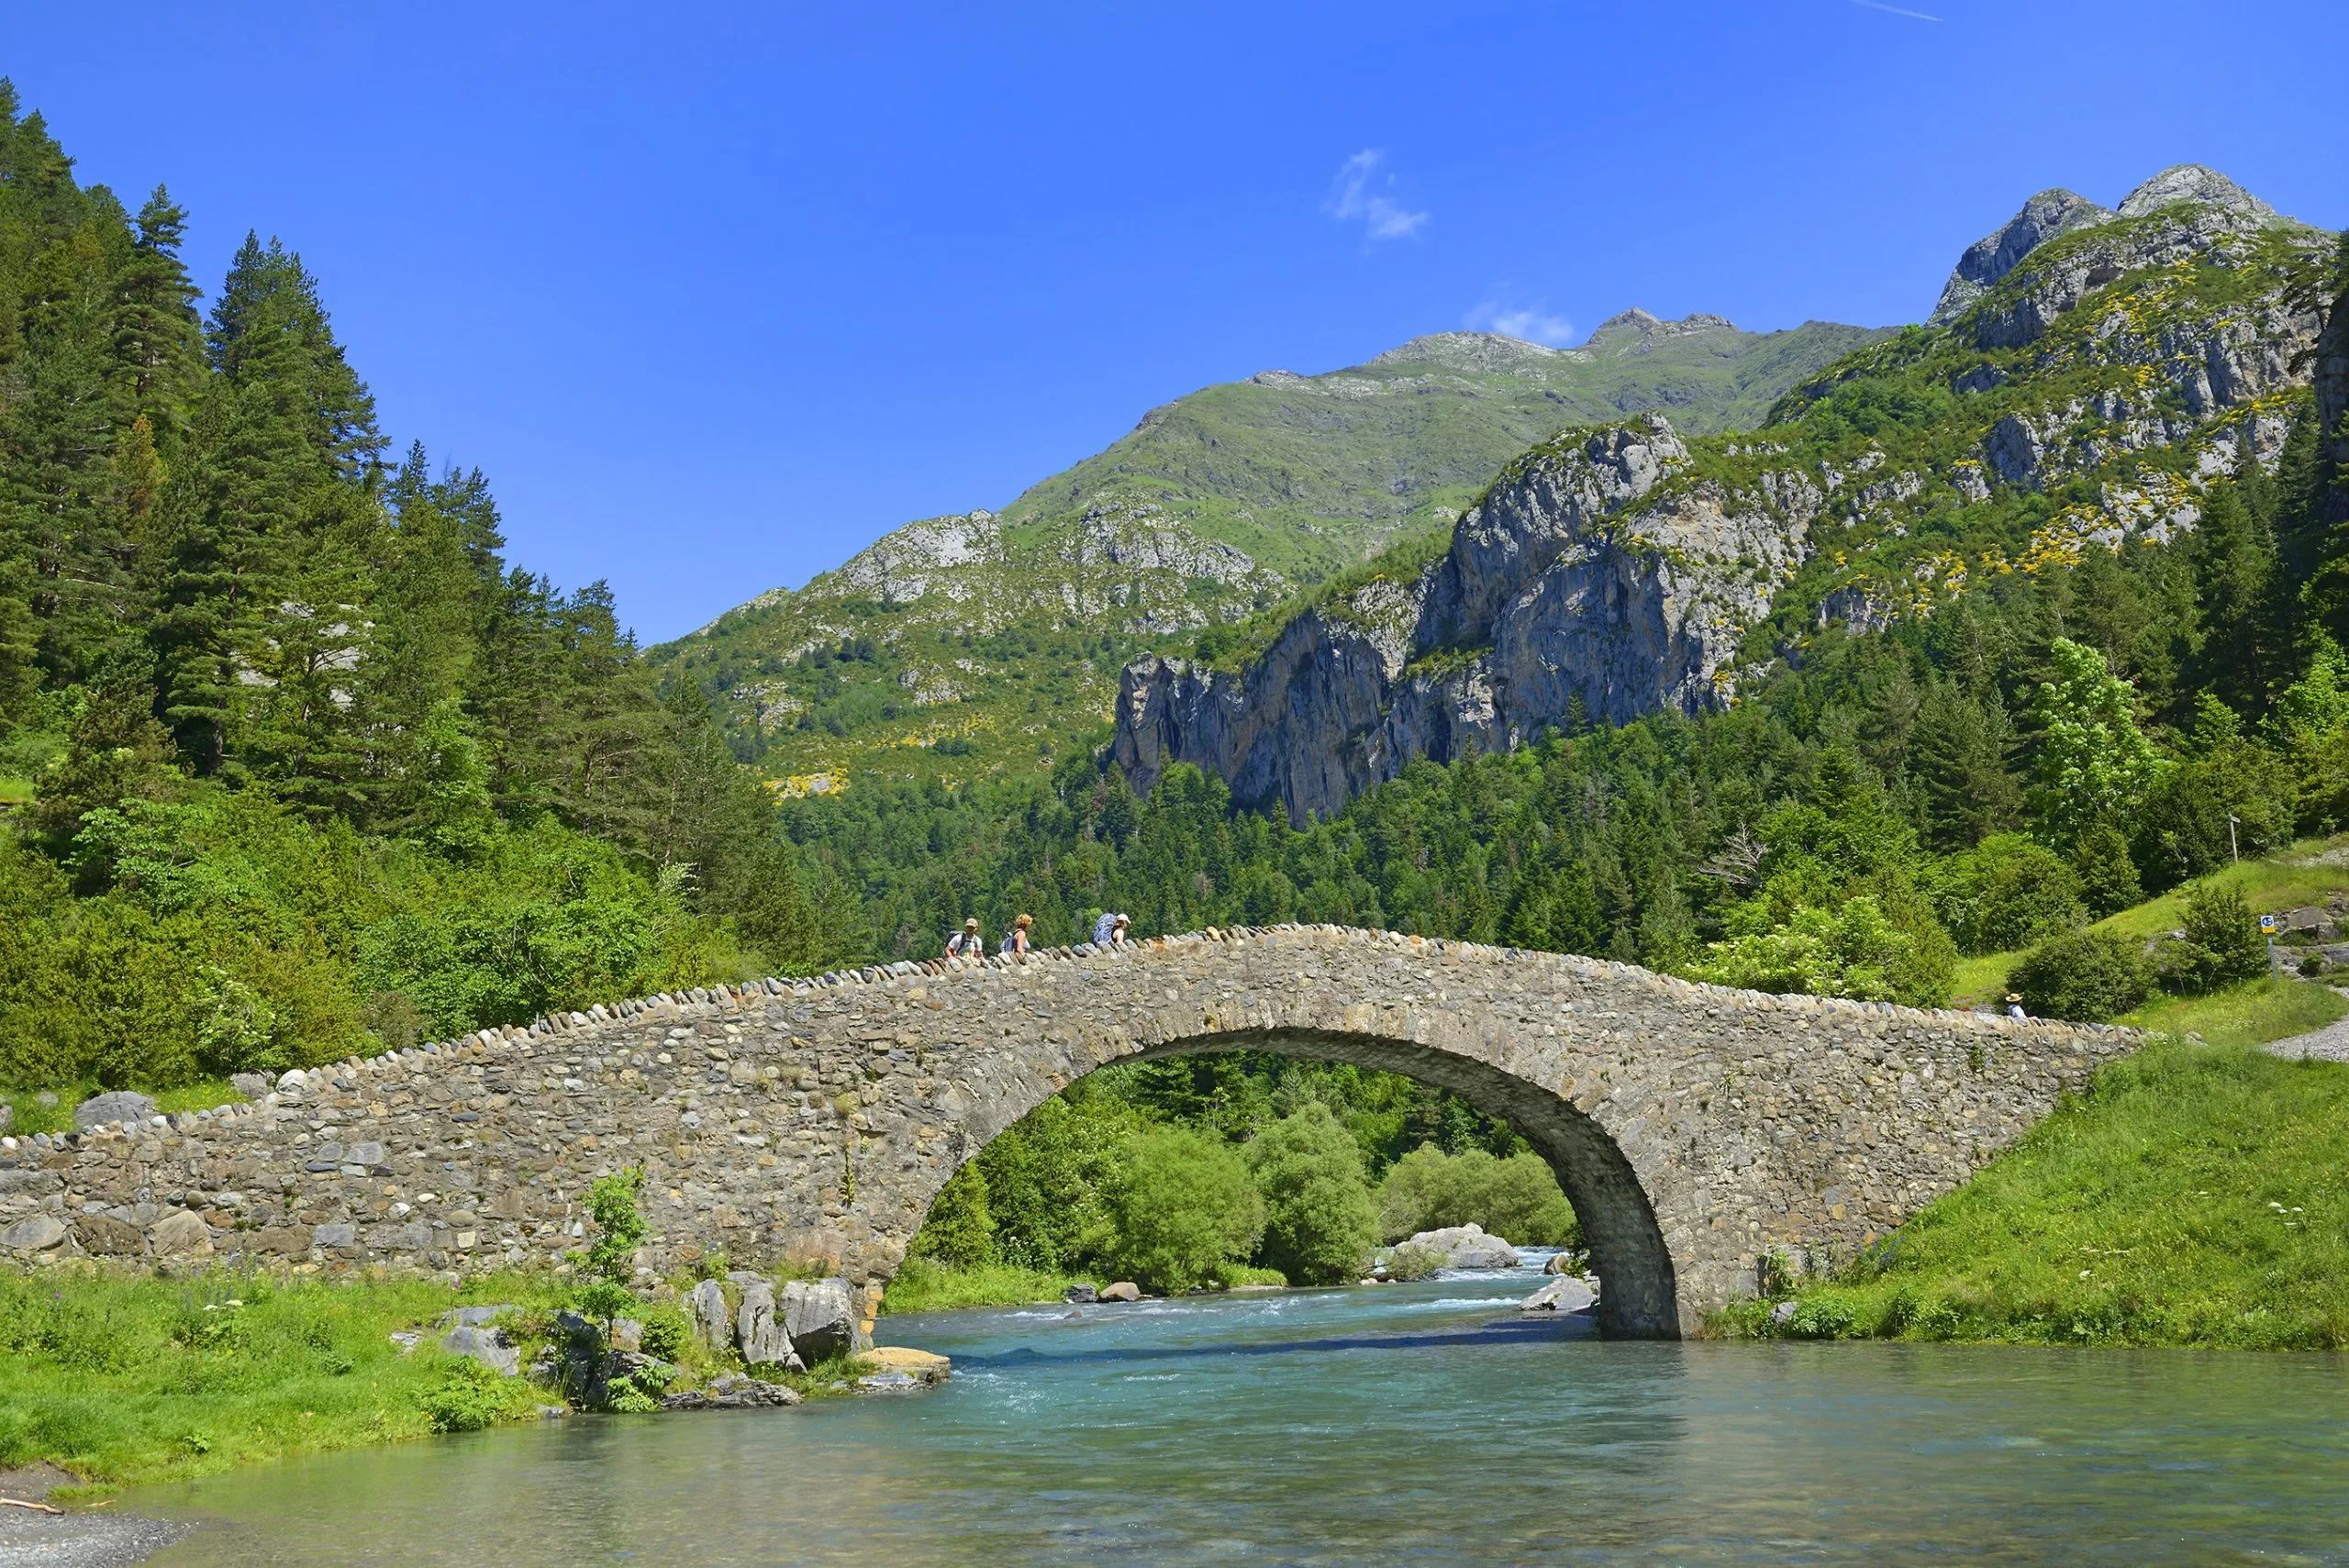 Romansk bro i Bujaruelo-dalen, 1200-tallet ved elven Ara, i de aragonske Pyreneene, Huesca, Spania